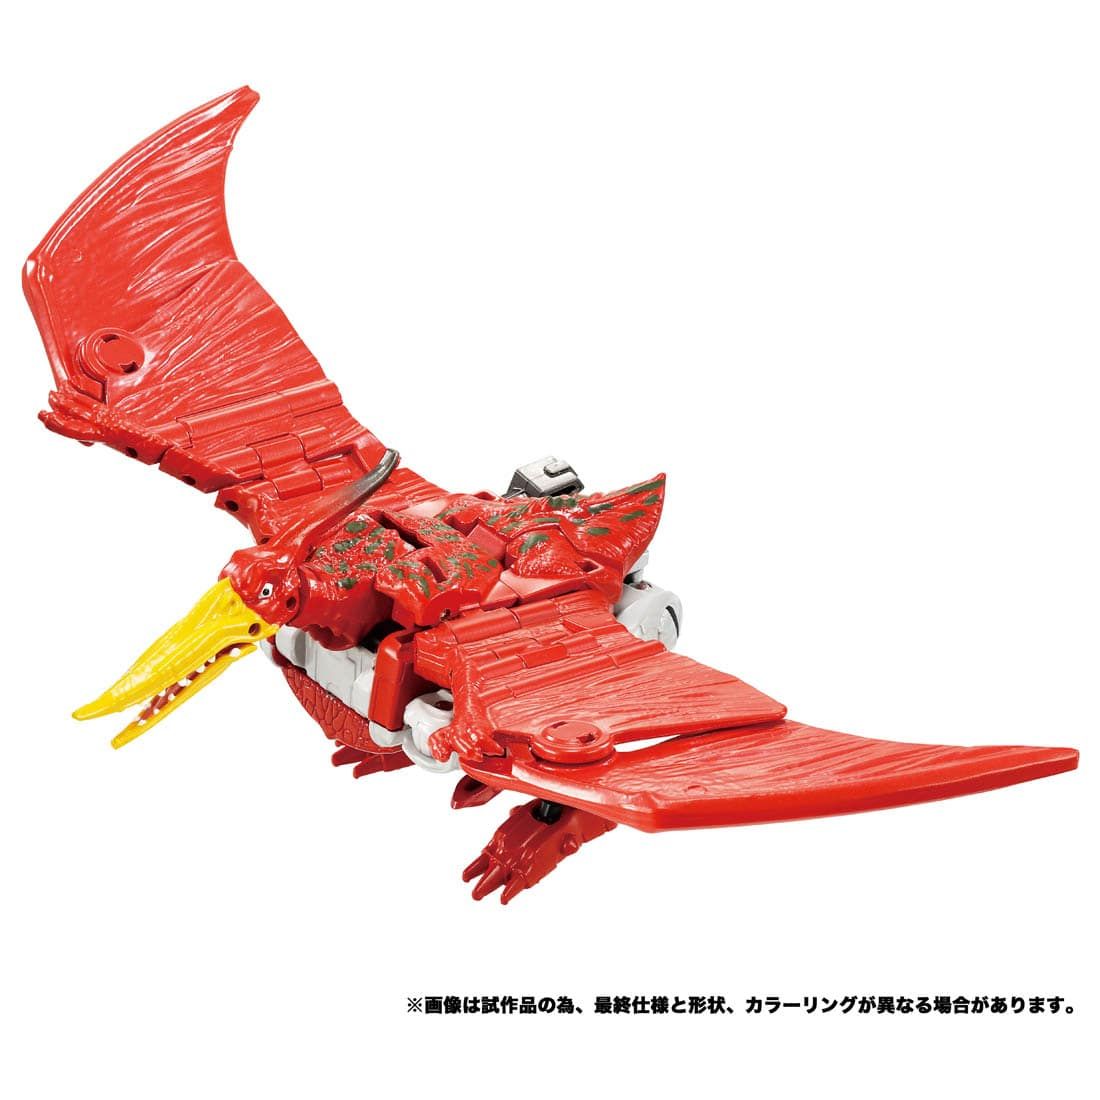 PRE-ORDER Transformers Takara BWVS-05 Rattrap vs Terrorsaur